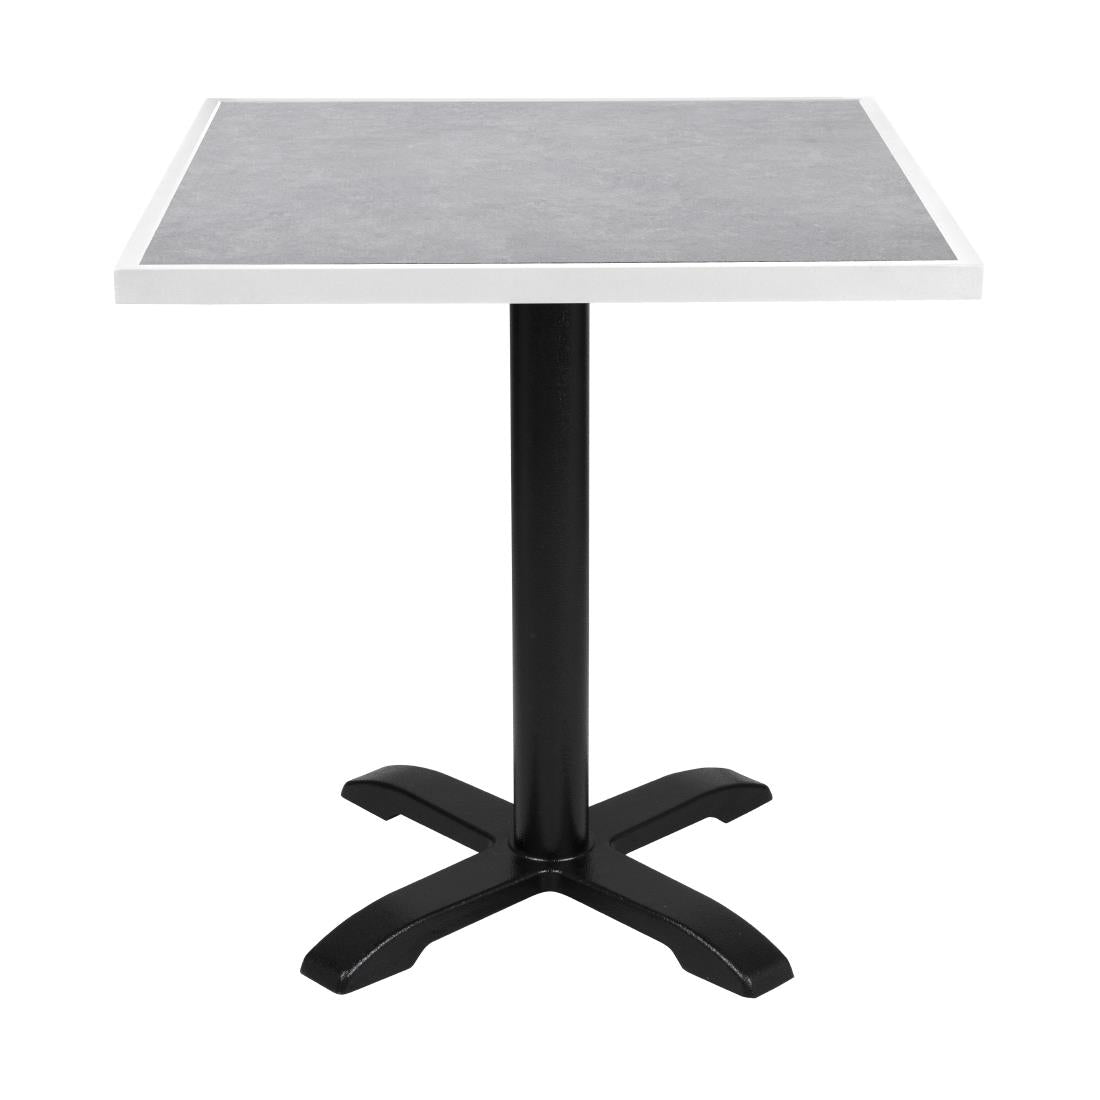 FU514 Bolero Light Grey Stone Effect Outdoor Tempered Glass Table Top White Trim 700mm